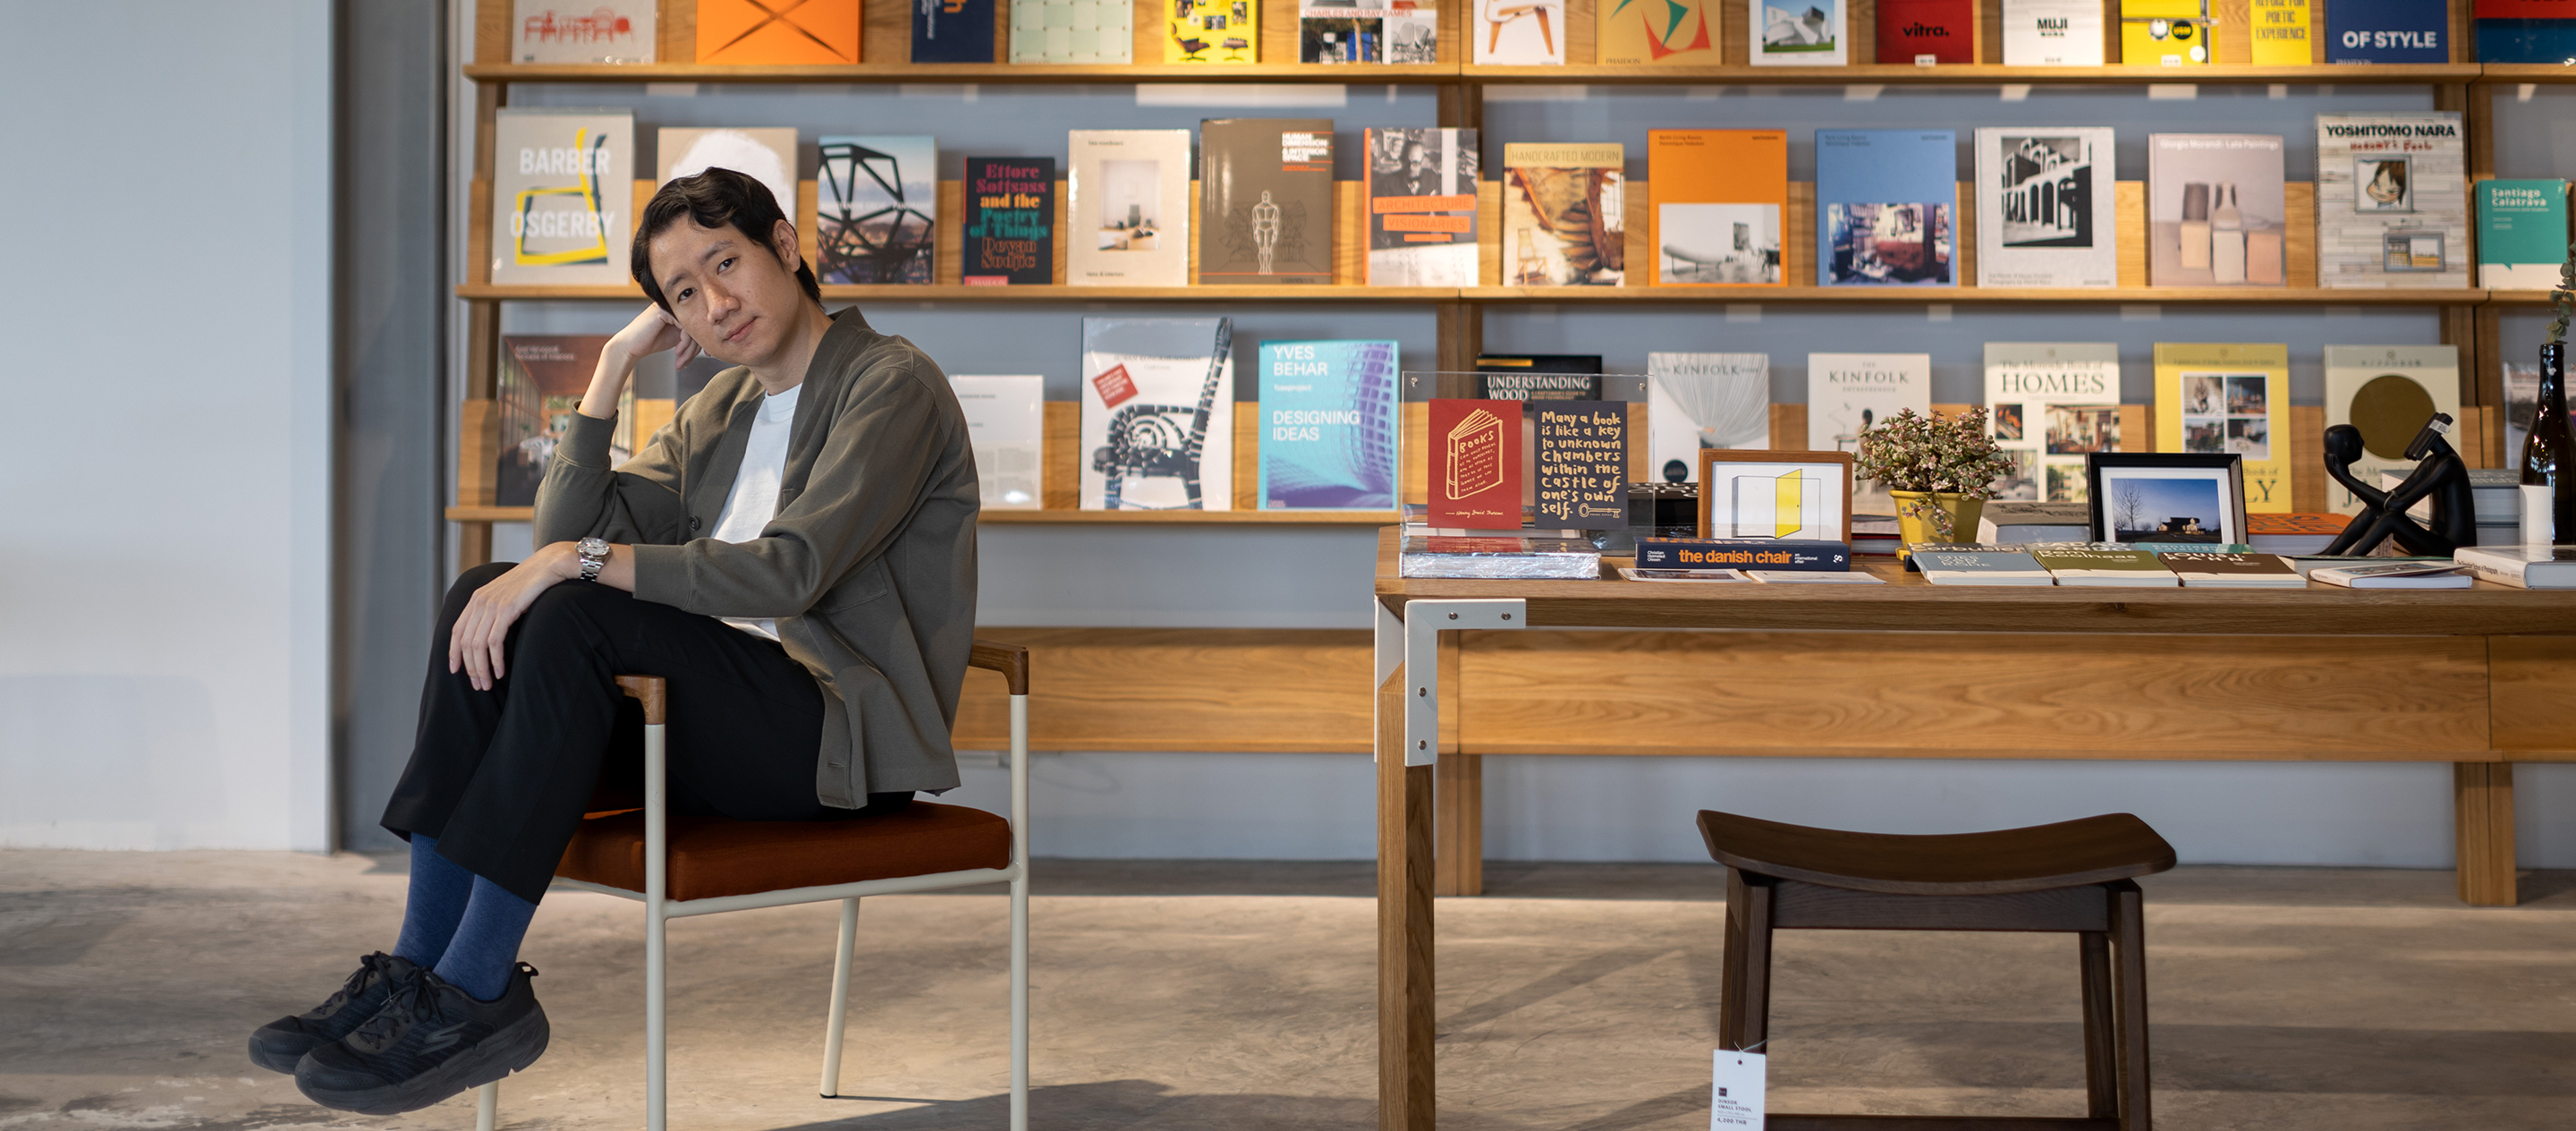 Flo Bookstore ร้านหนังสือดีไซน์ในสุขุมวิท 36 จุดนัดพบแห่งใหม่ของคนรักหนังสือ กาแฟ และเฟอร์นิเจอร์